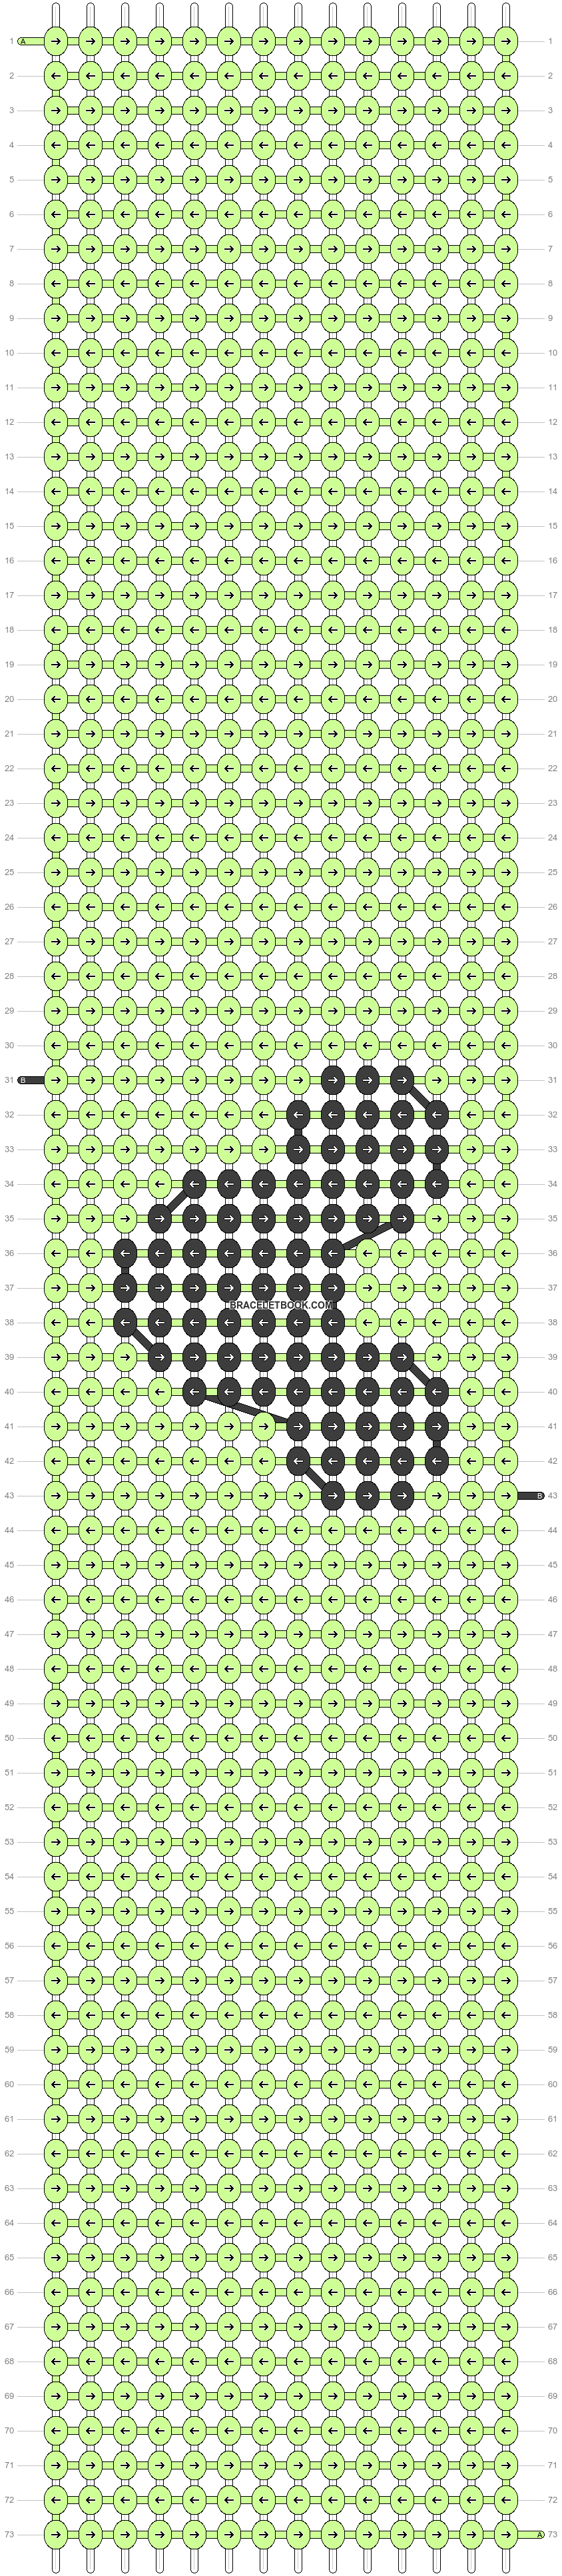 Alpha pattern #54139 variation #92856 pattern